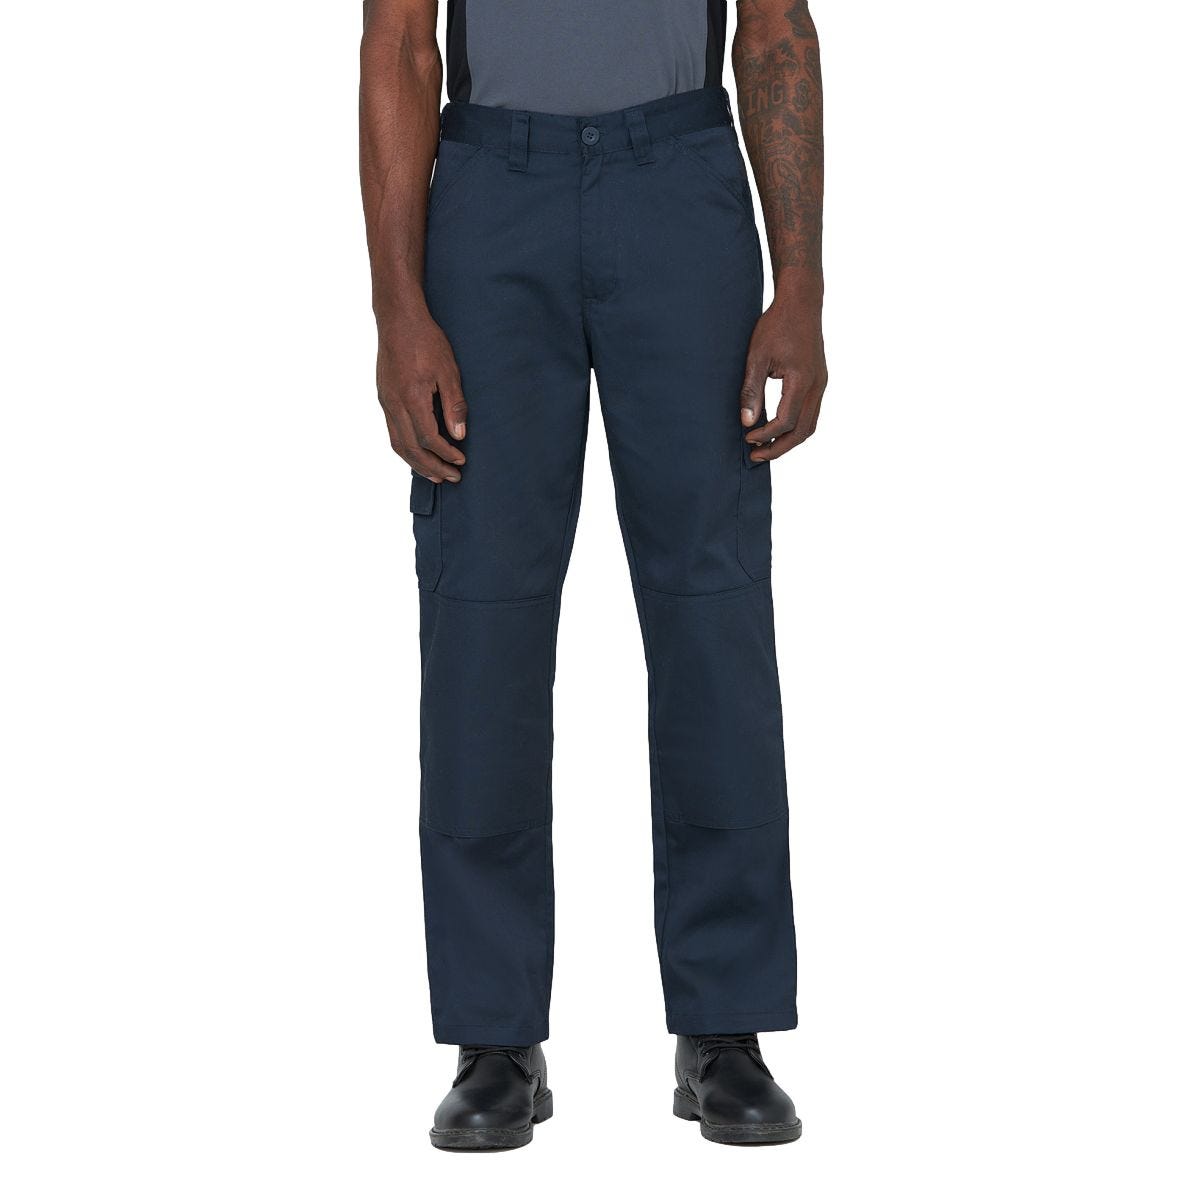 Pantalon Everyday Bleu marine - Dickies - Taille 40 2